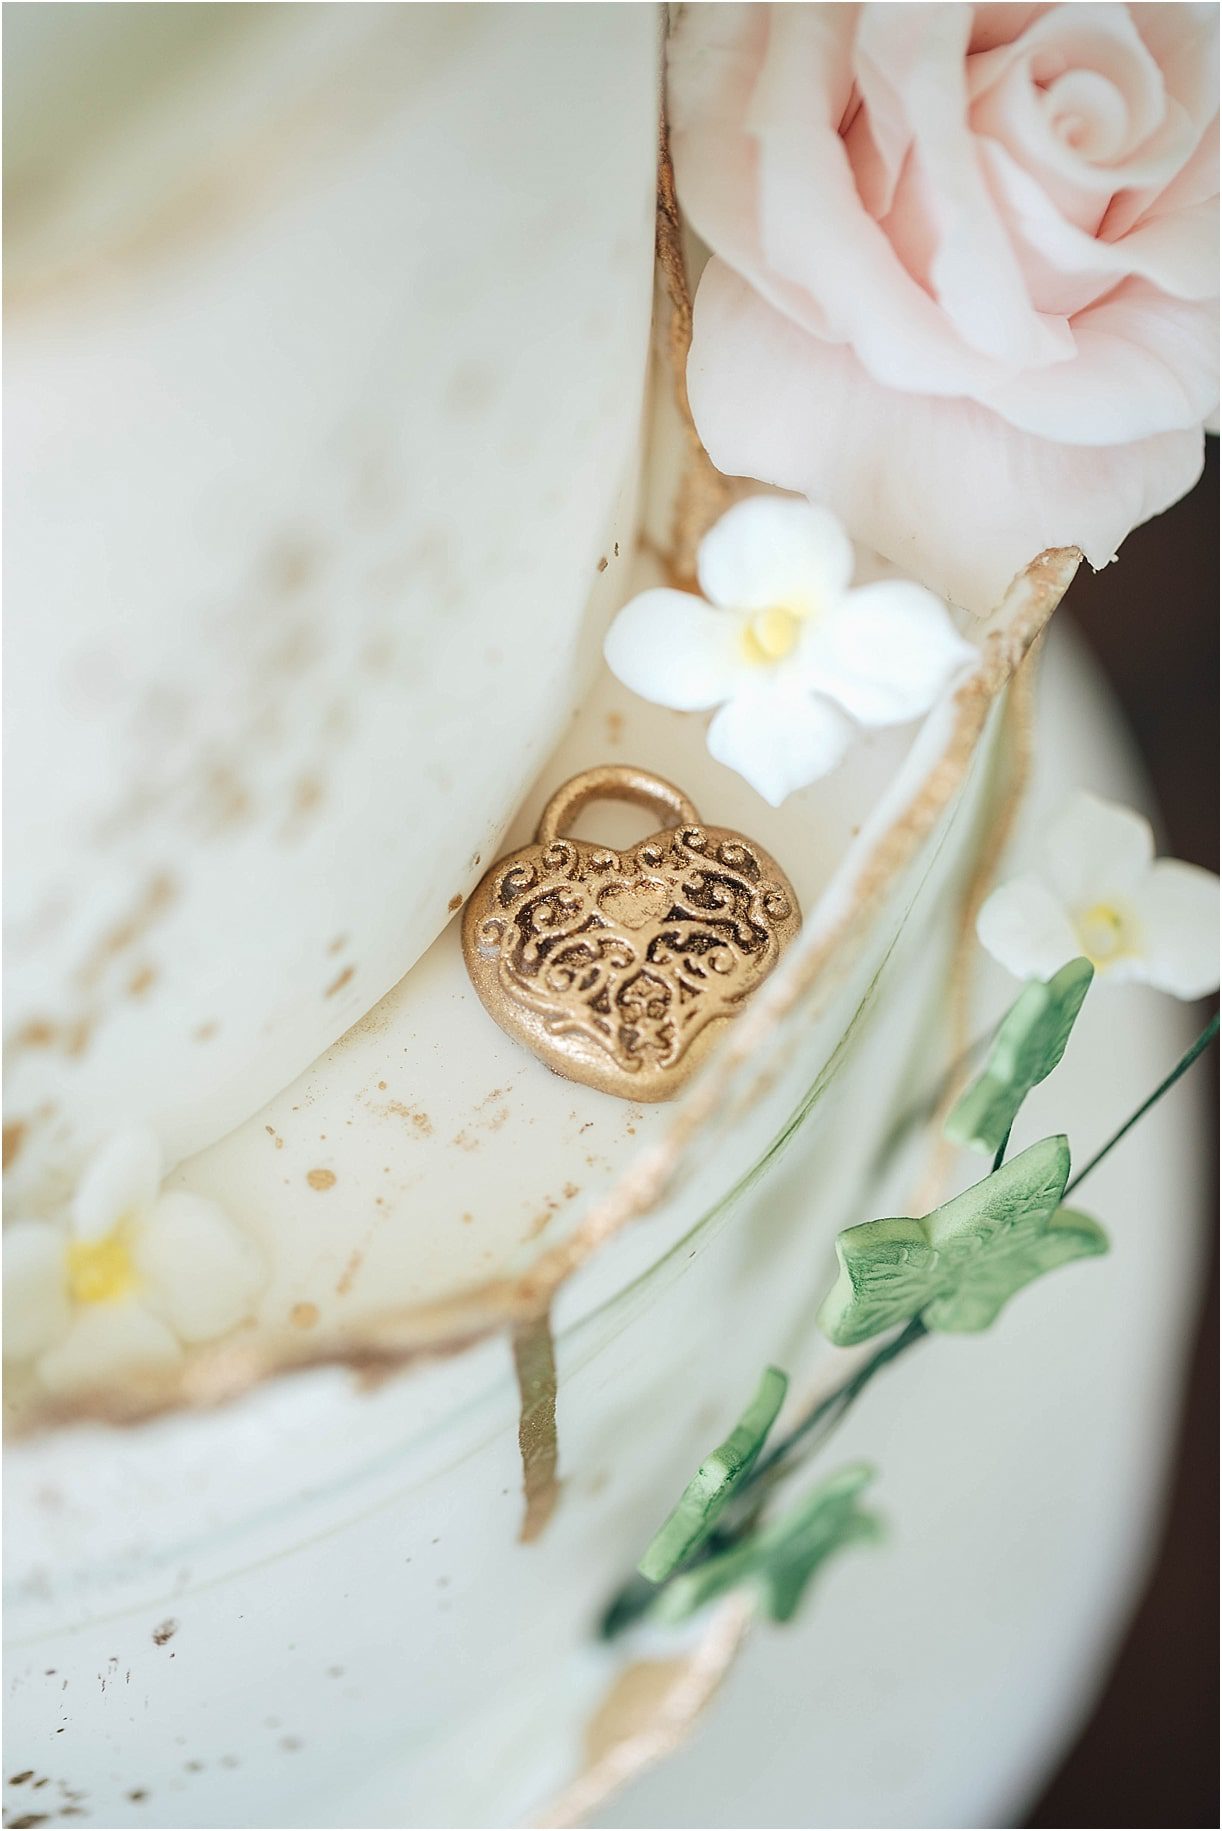 An Intimate Secret Garden Wedding in Virginia | Hill City Bride Virginia Wedding Inspiration Blog Cake Heart Lock